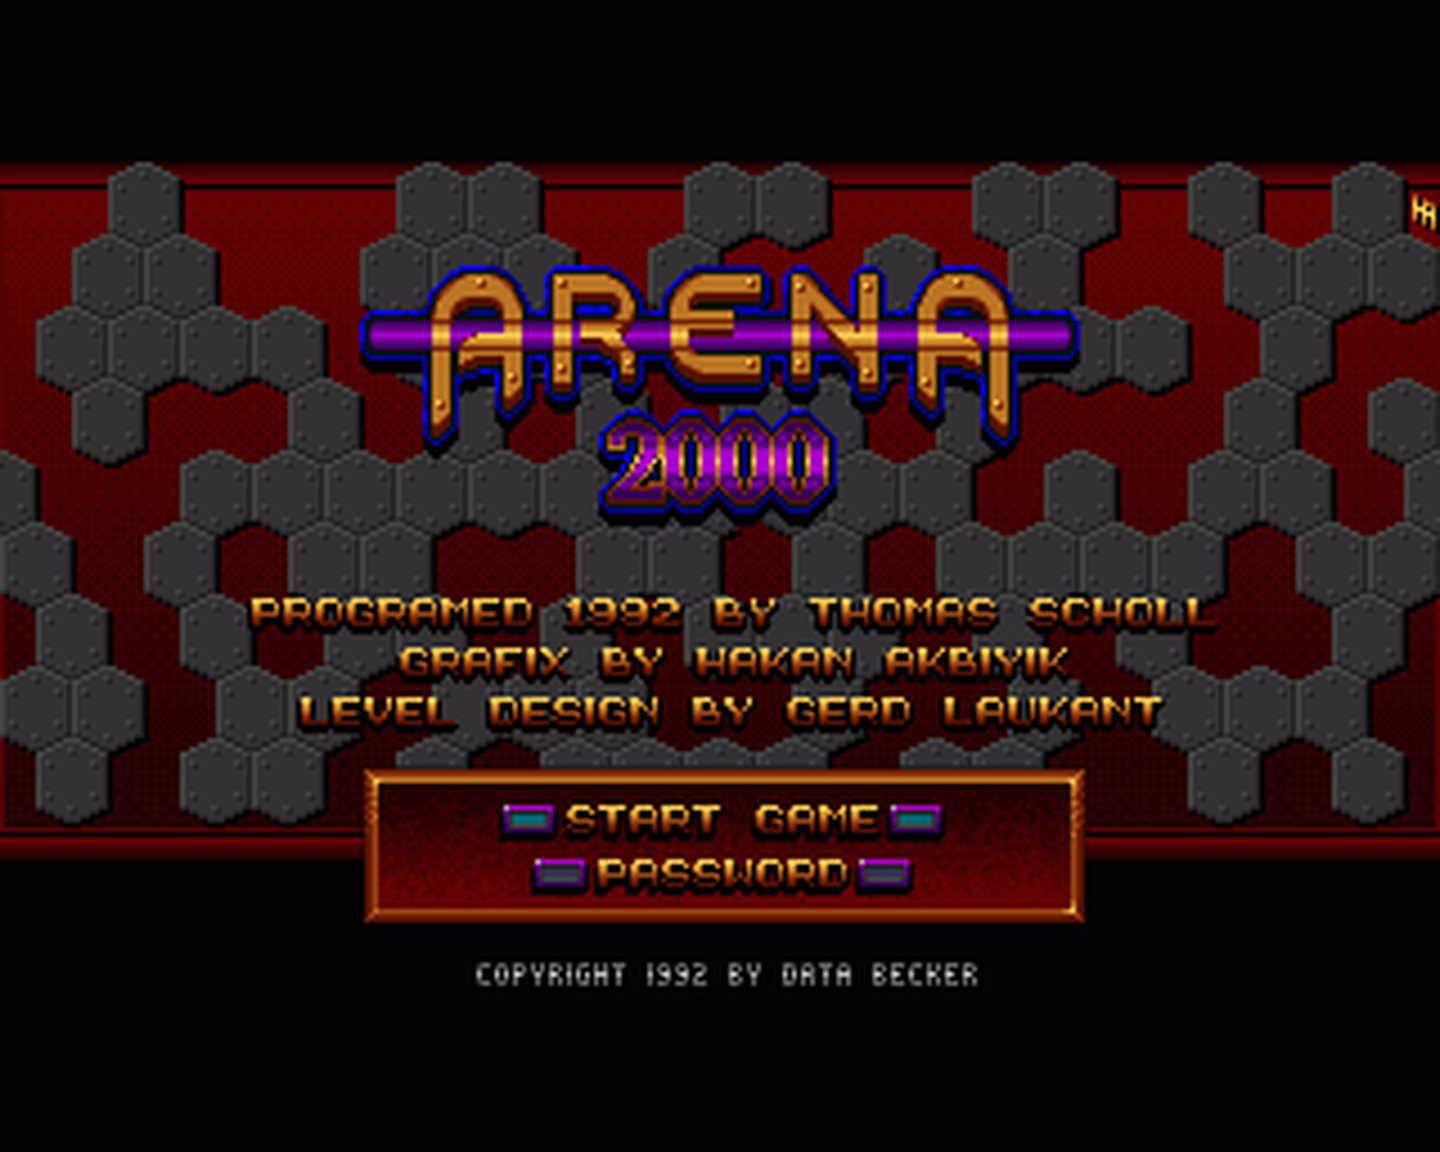 Amiga GameBase Arena_2000 Data_Becker 1992